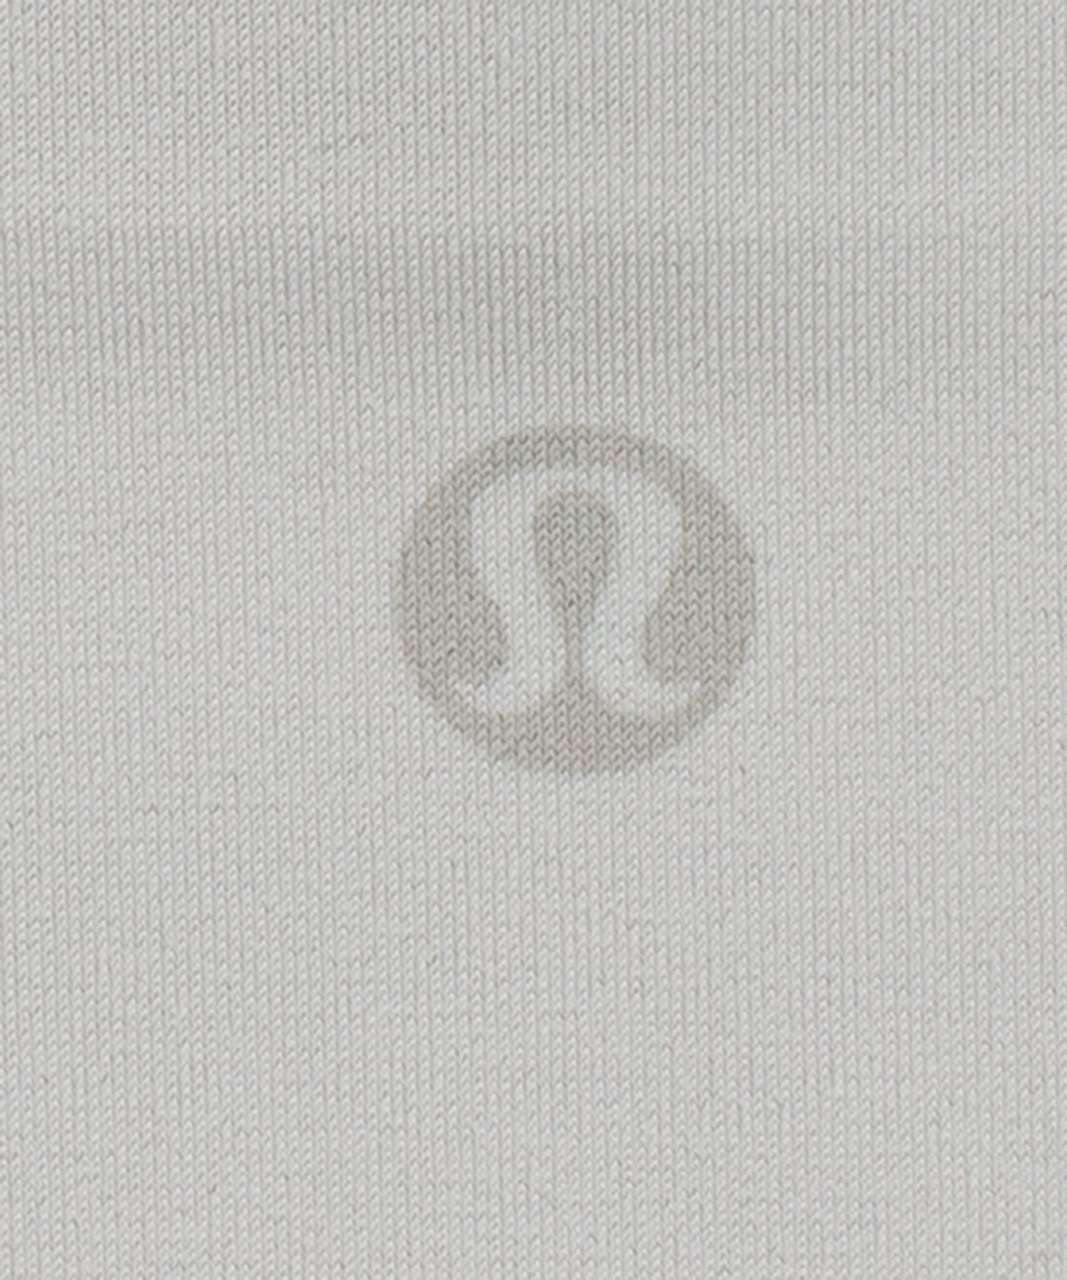 Lululemon InvisiWear Mid-Rise Thong Underwear 3 Pack - Lemon Sorbet / Seal Grey / Malibu Peach